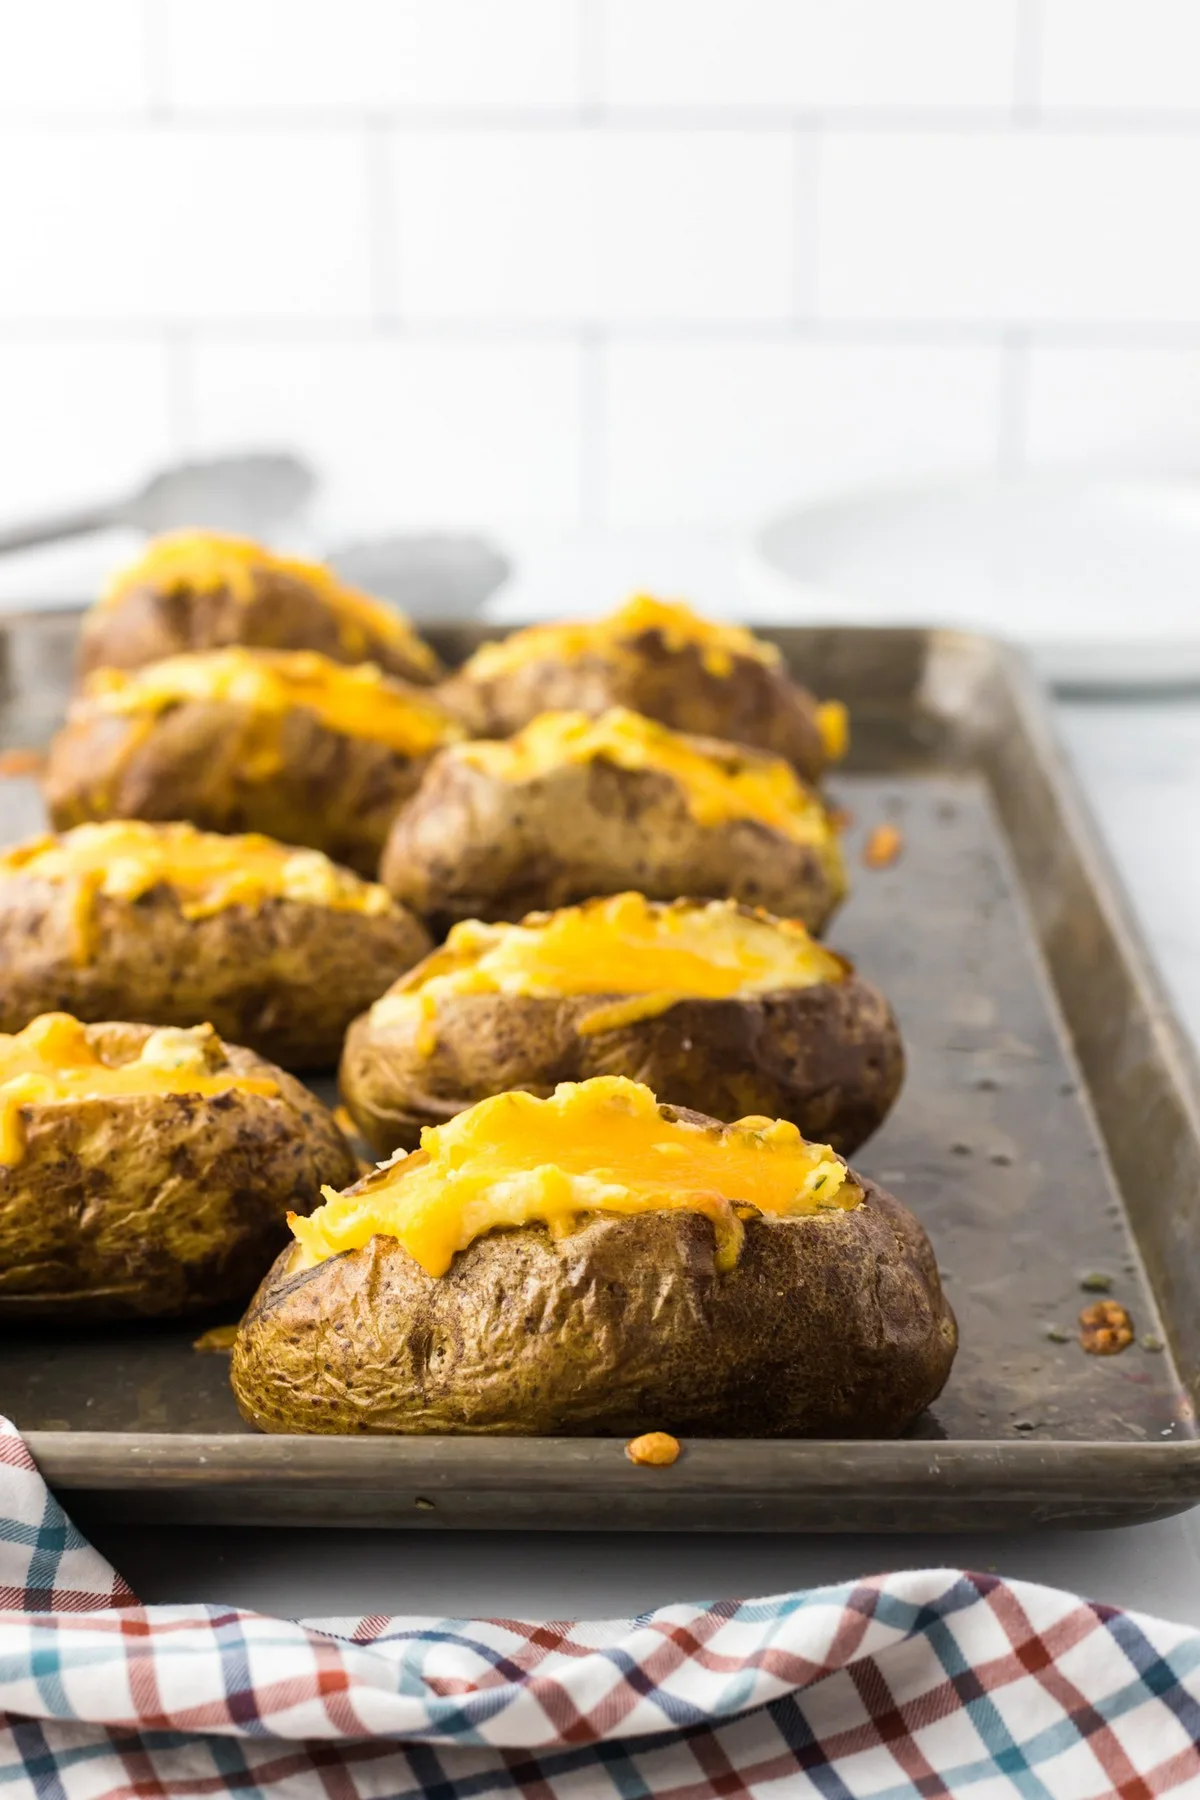 How to Make Twice-Baked Potatoes